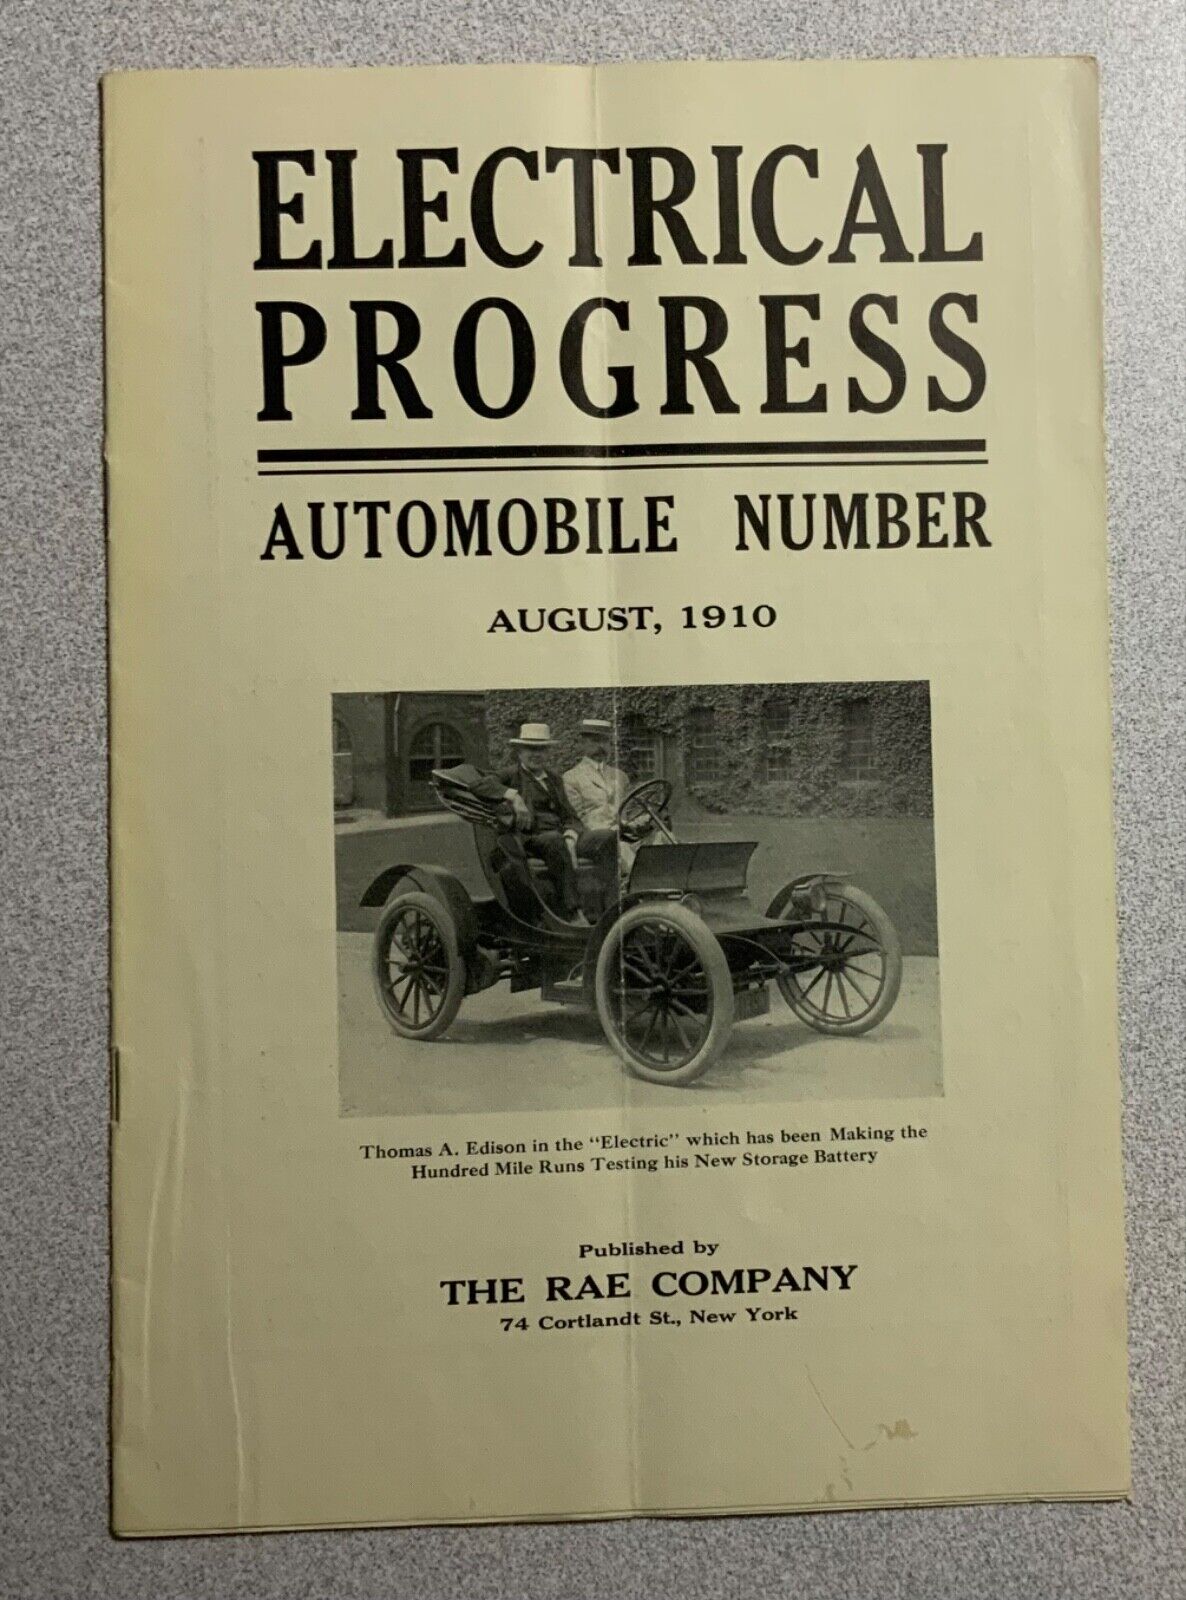 Vintage EV 1910 Electrical Progress Publication - Edison Electric Car 100 Miles